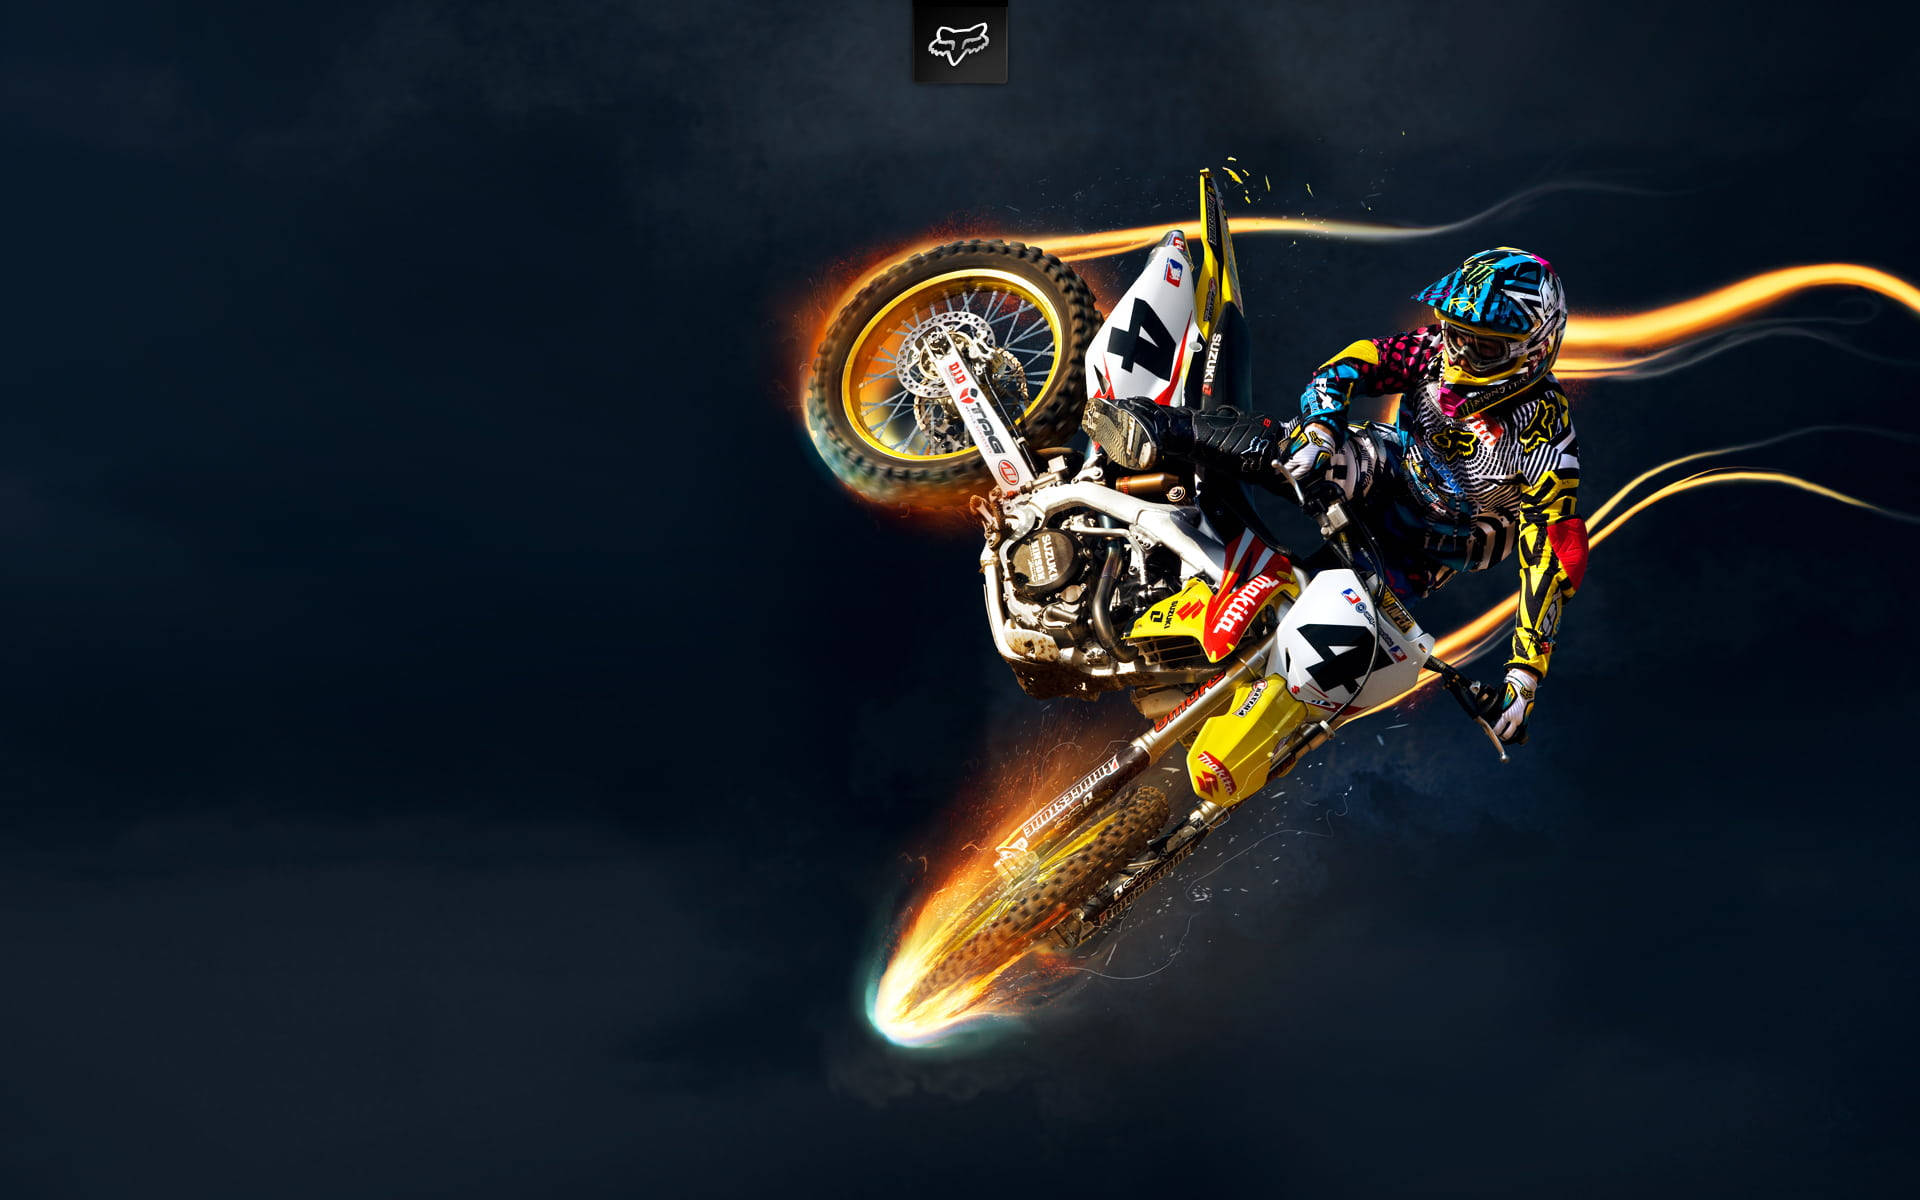 Flaming Motocross Bike On A Dark Background